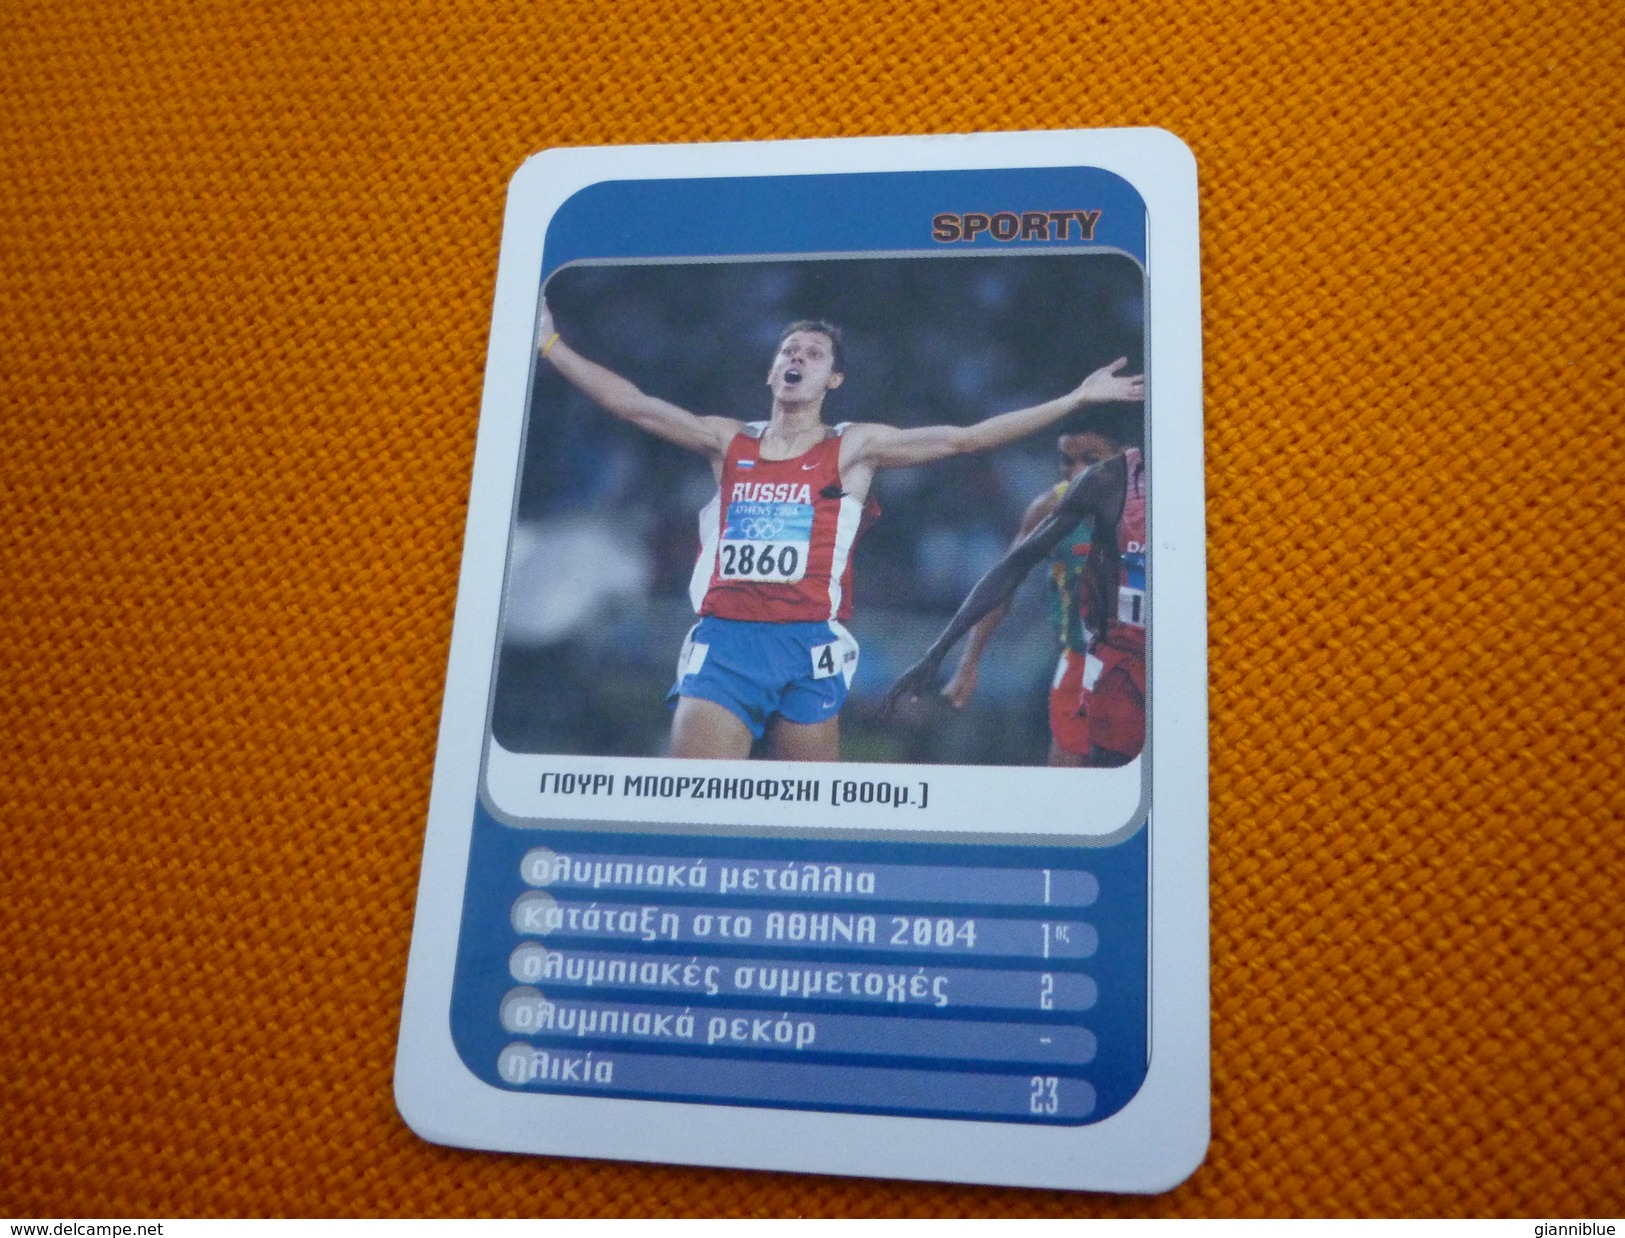 Yuriy Borzakovskiy Russian 800 M Runner Run Athens 2004 Olympic Games Medalist Greece Greek Trading Card - Trading Cards